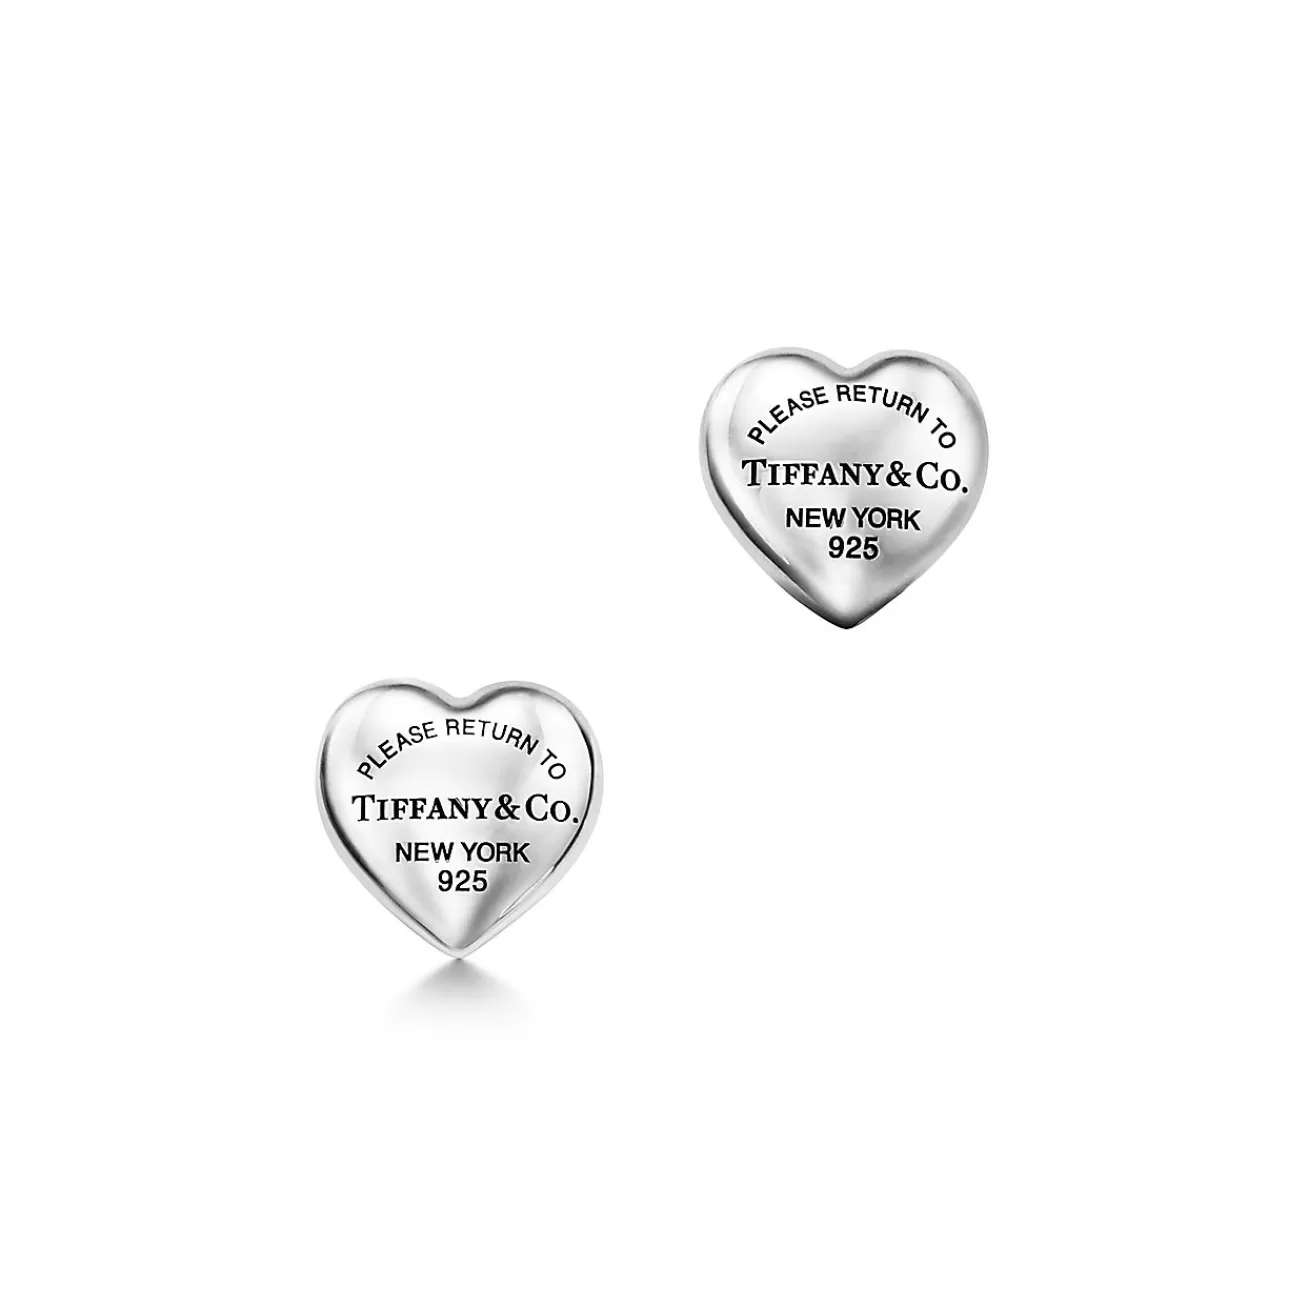 Tiffany & Co. Return to Tiffany® Full Heart Earrings in Sterling Silver | ^ Earrings | Gifts for Her